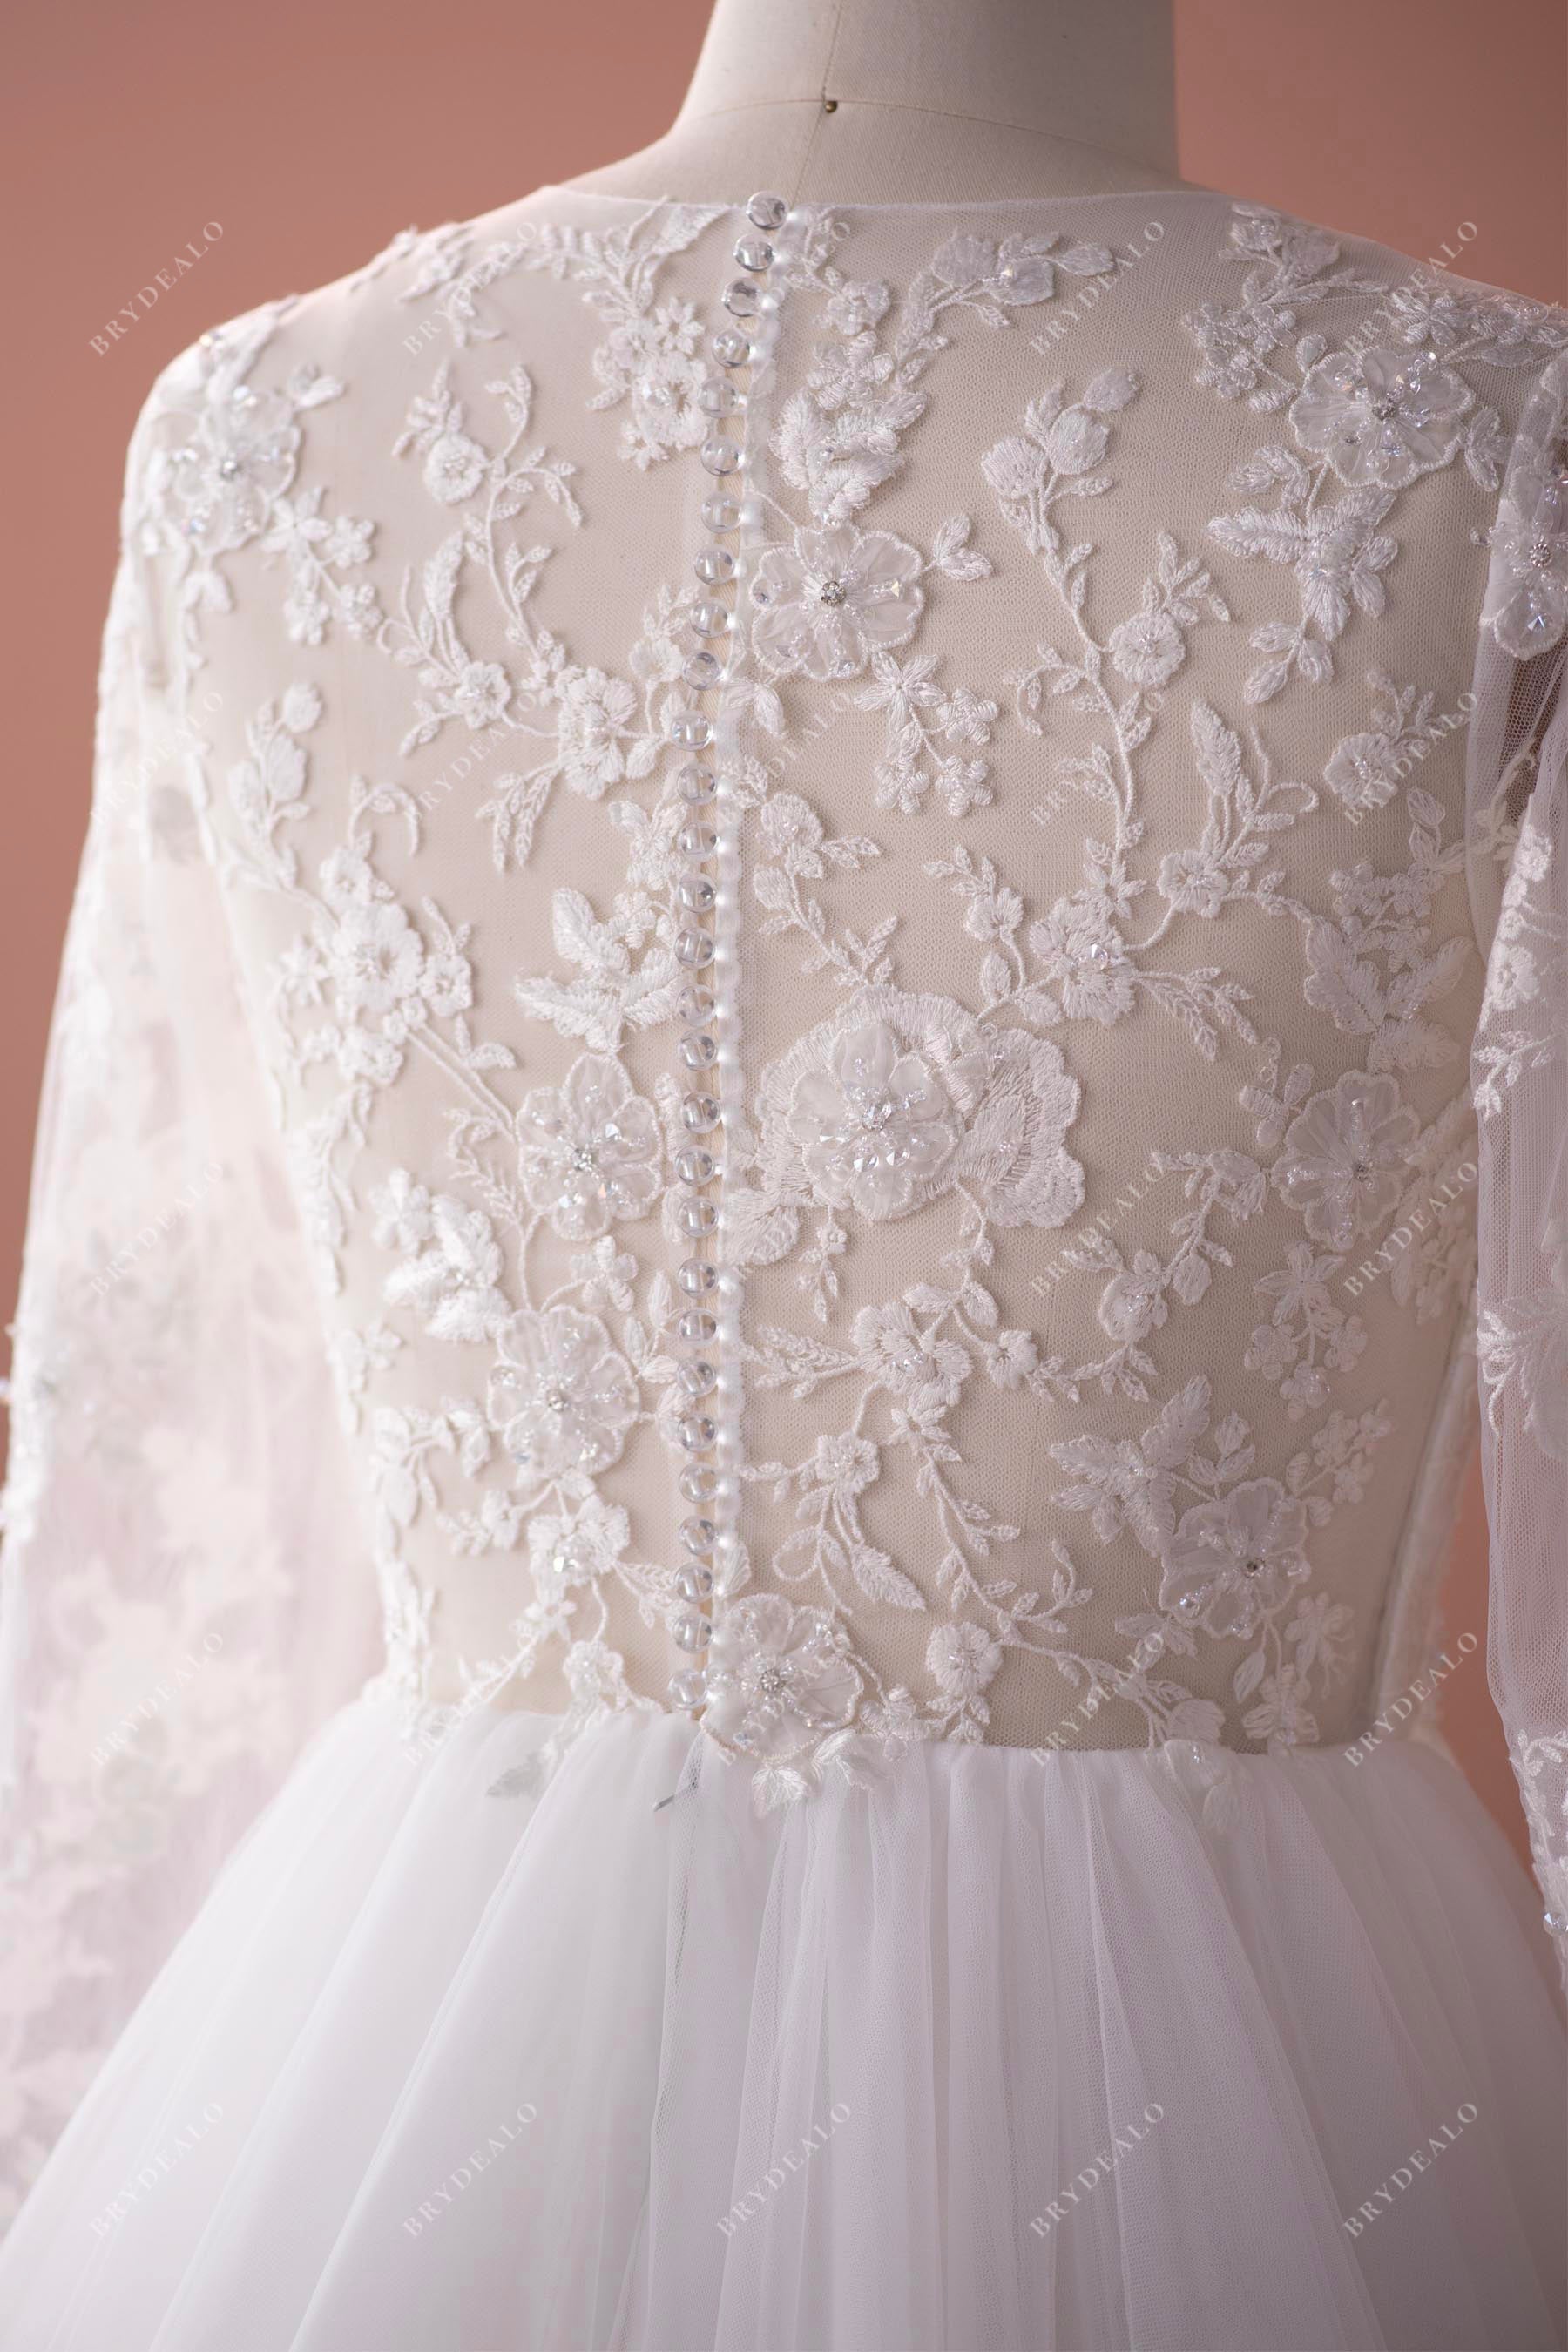 buttoned illusion lace back wedding dress